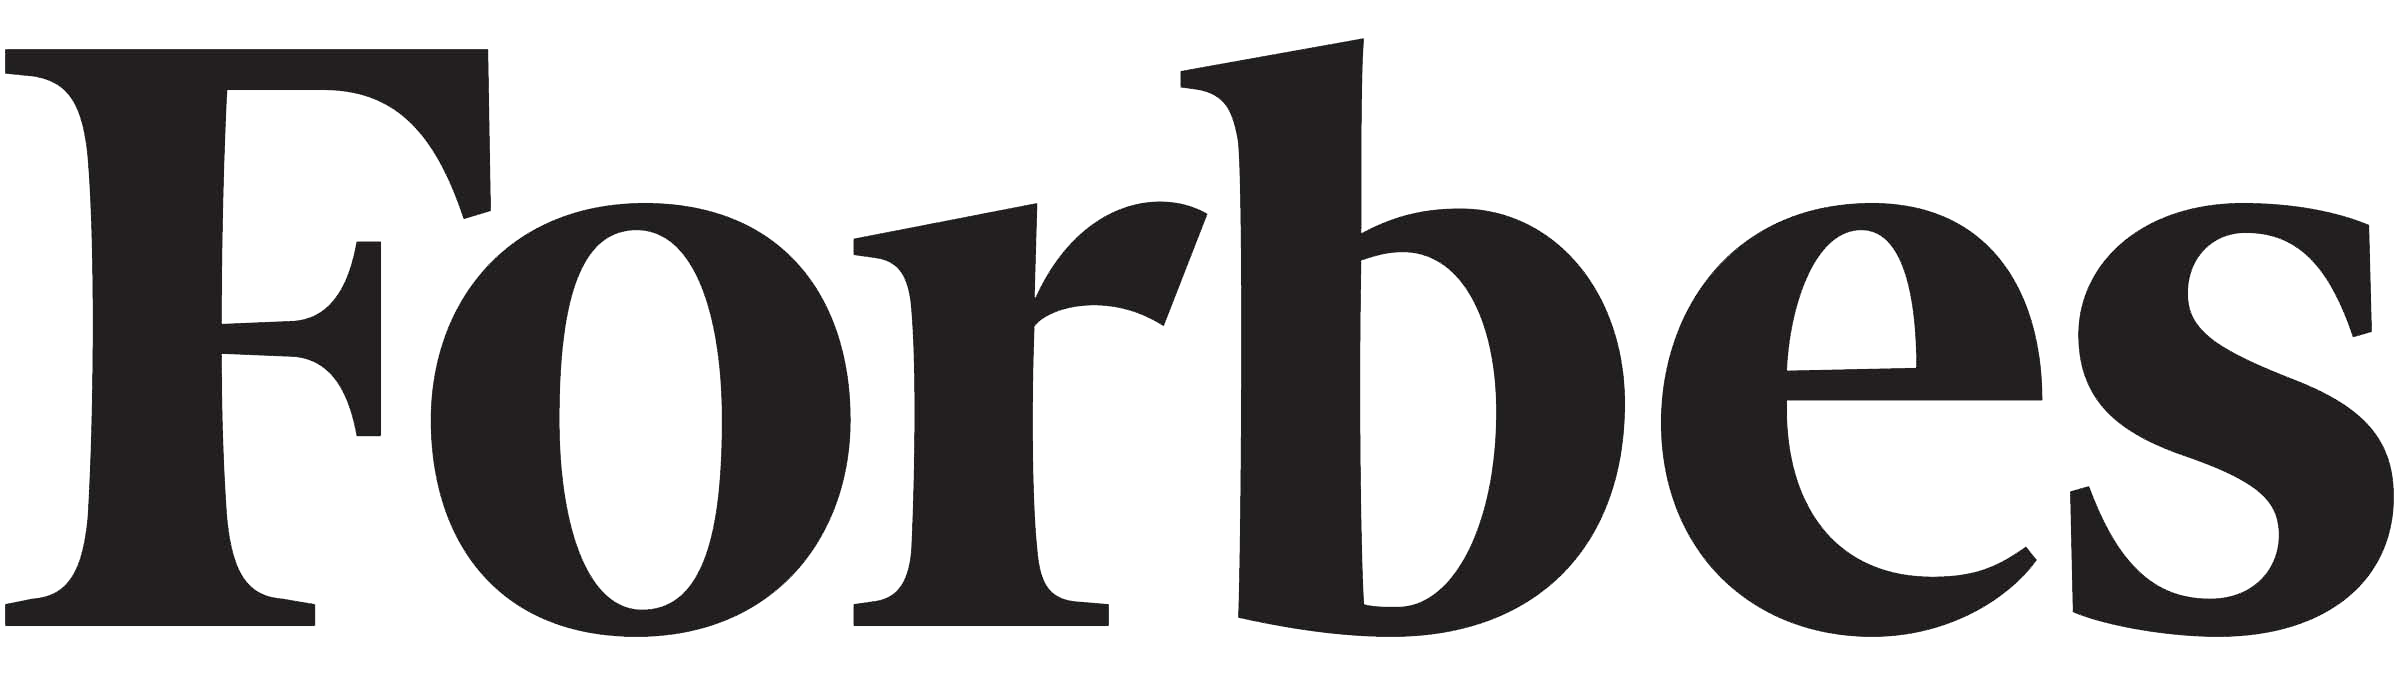 Forbes logo black